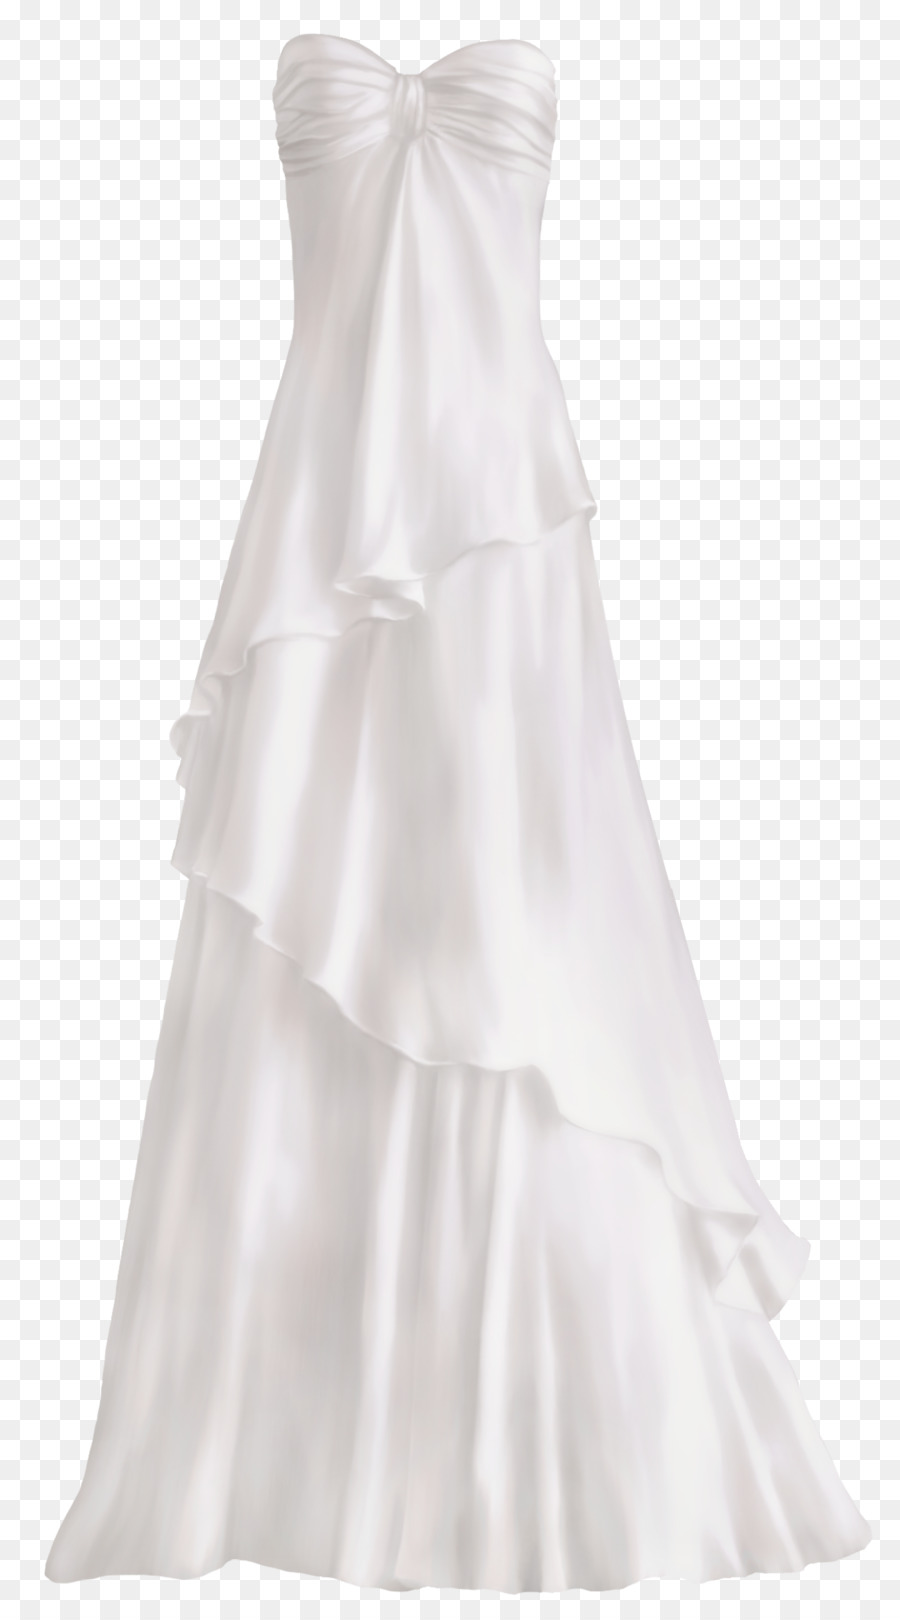 Wedding dress Dirndl Folk costume Clothing Accessories - wedding dress png download - 2205*3969 - Free Transparent Dress png Download.